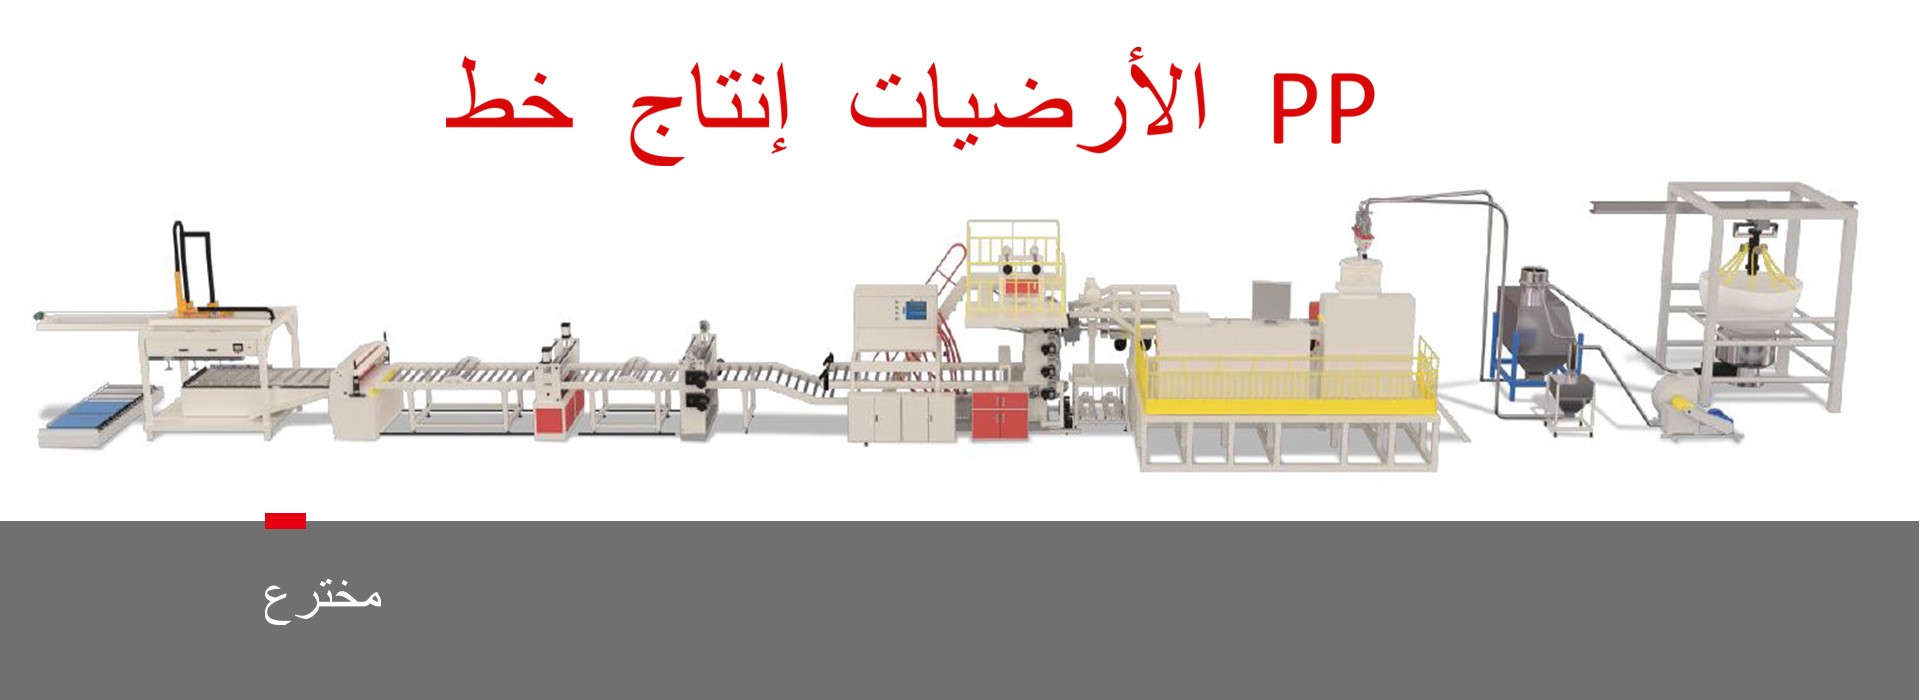 PP Flooring Production Line